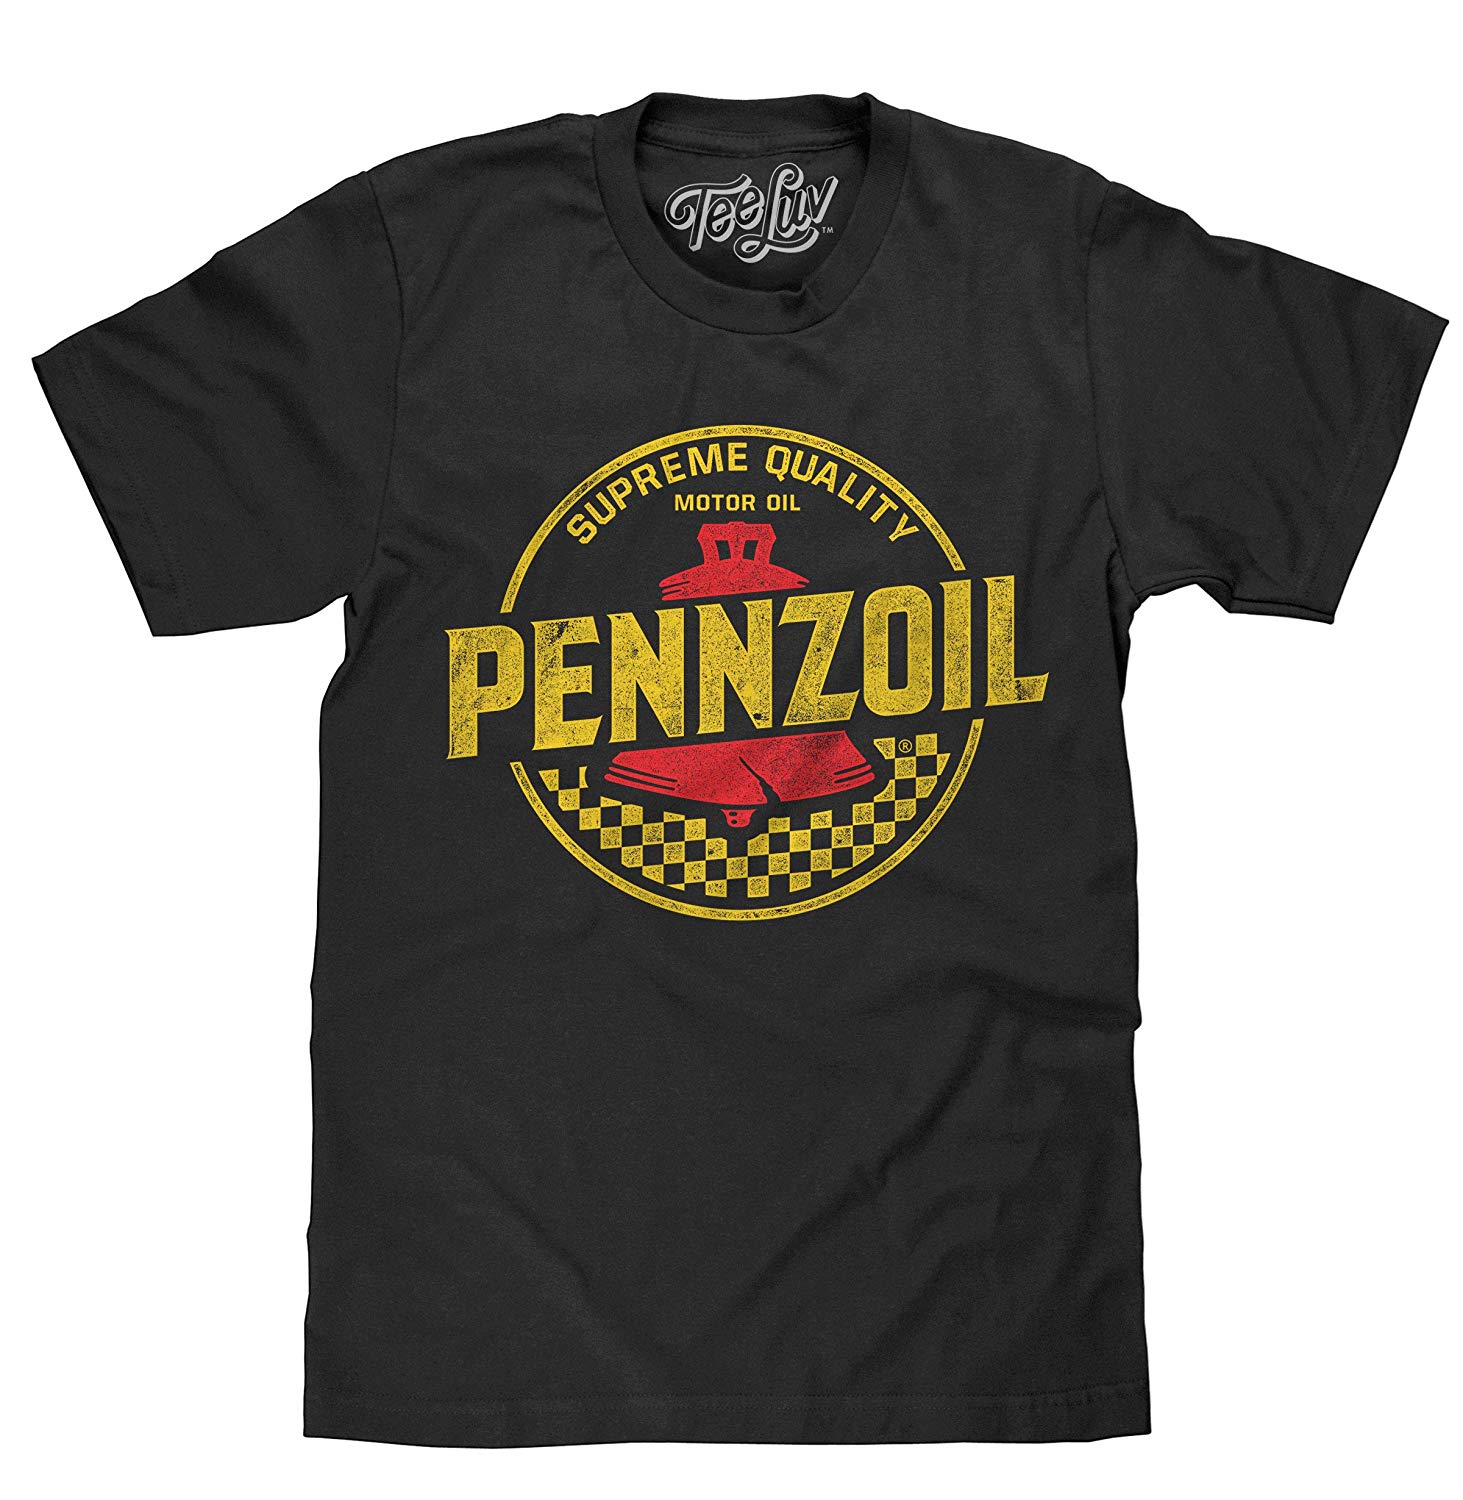 Pensoil Logo - Tee Luv Distressed Pennzoil T-Shirt - Pennzoil Motor Oil Logo Shirt